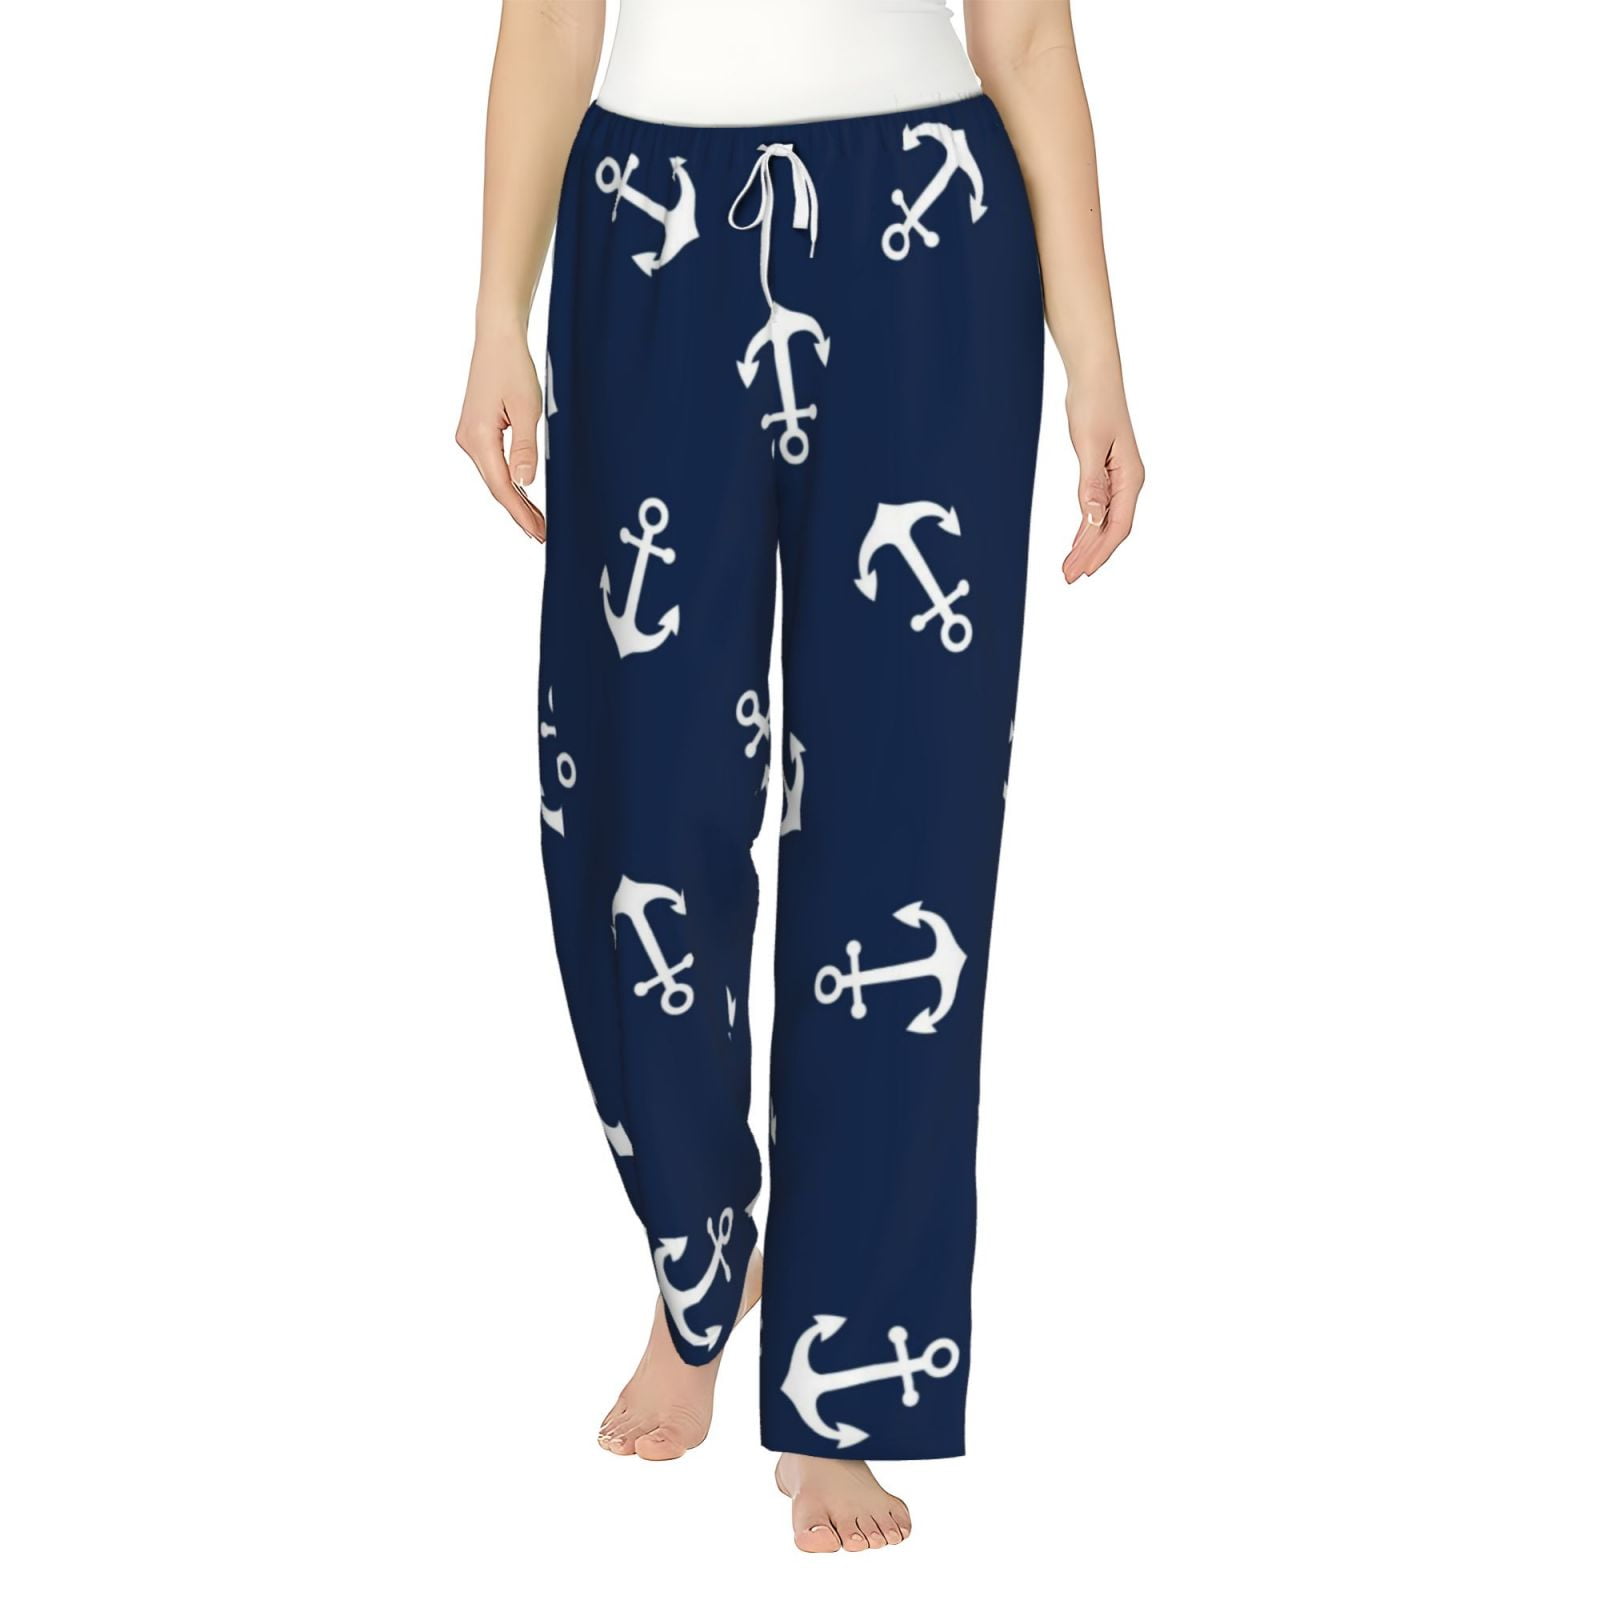 Bingfone Pajamas For Women,Nautical Themed Simple Anchors Pajama Pants ...